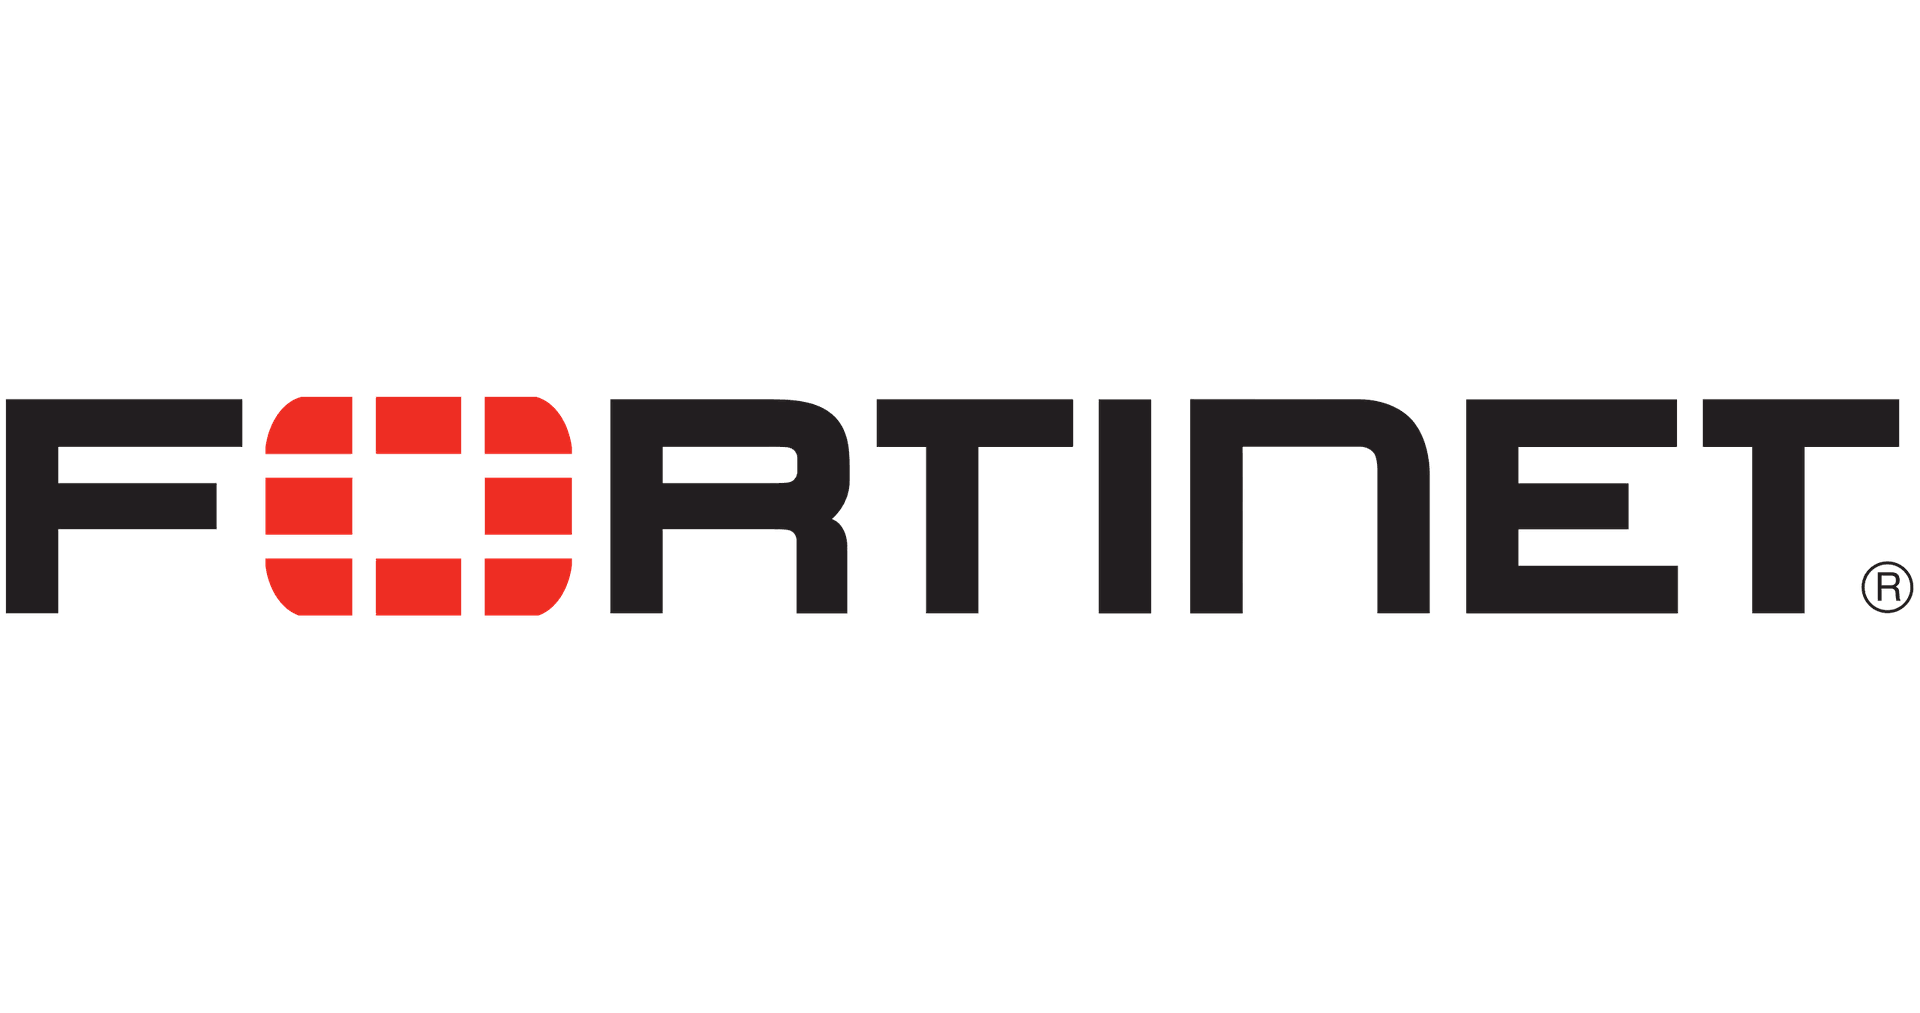 Brand: Fortinet